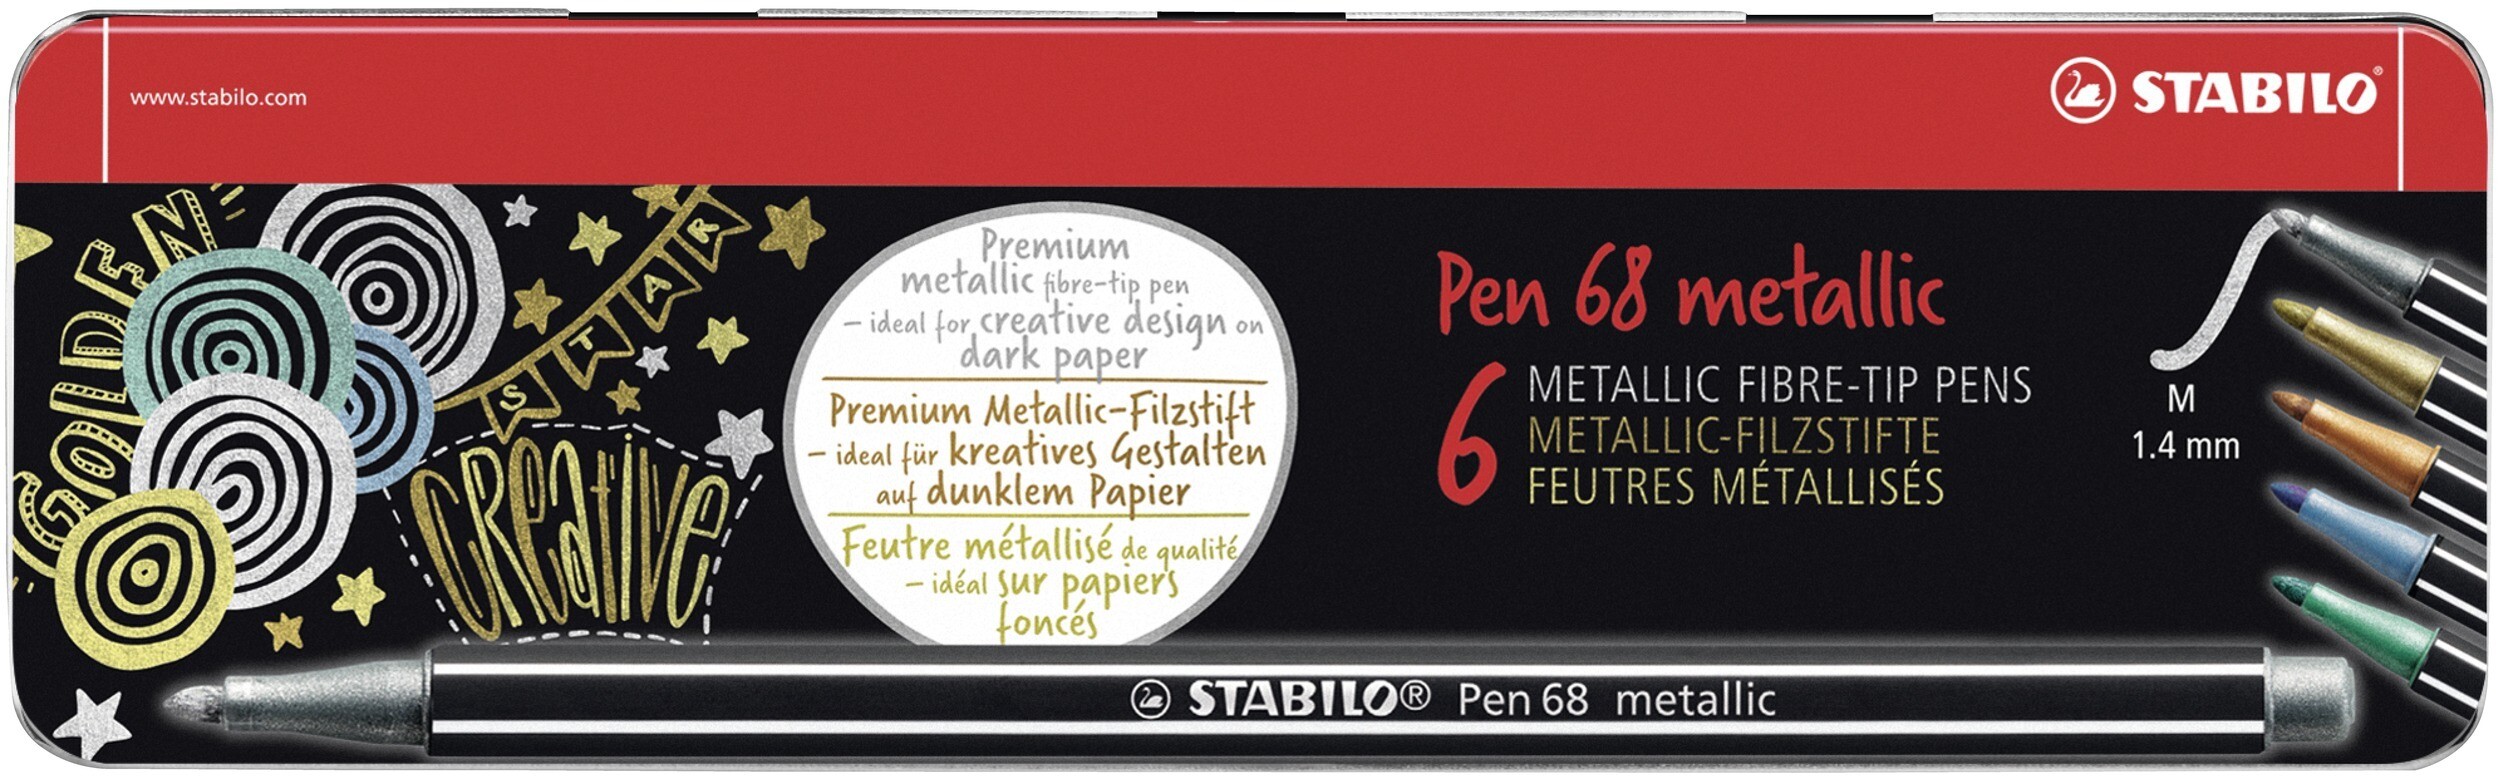 STABILO Filzstift Premium Metallic-Filzstift Pen 68 metallic 6er Metalletui